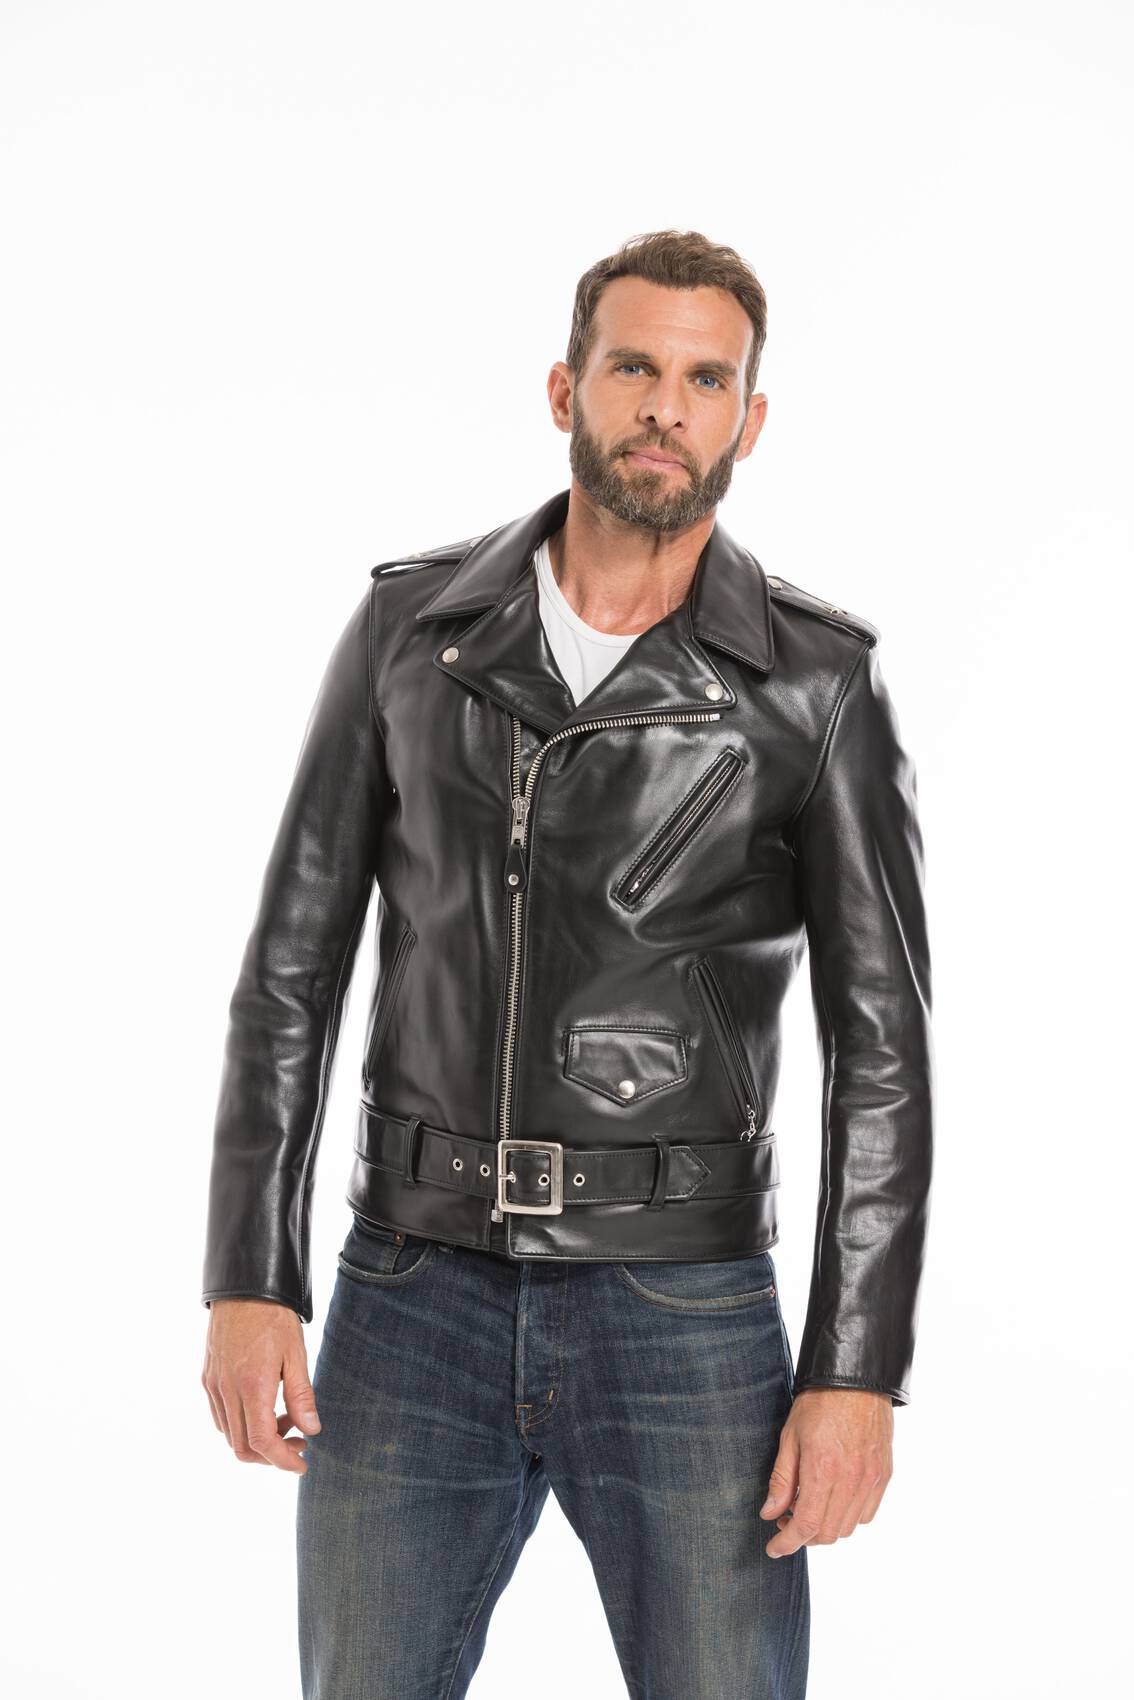 Bomber Leather jackets SCHOTT of leather calfskin-réf 613 SH noir 